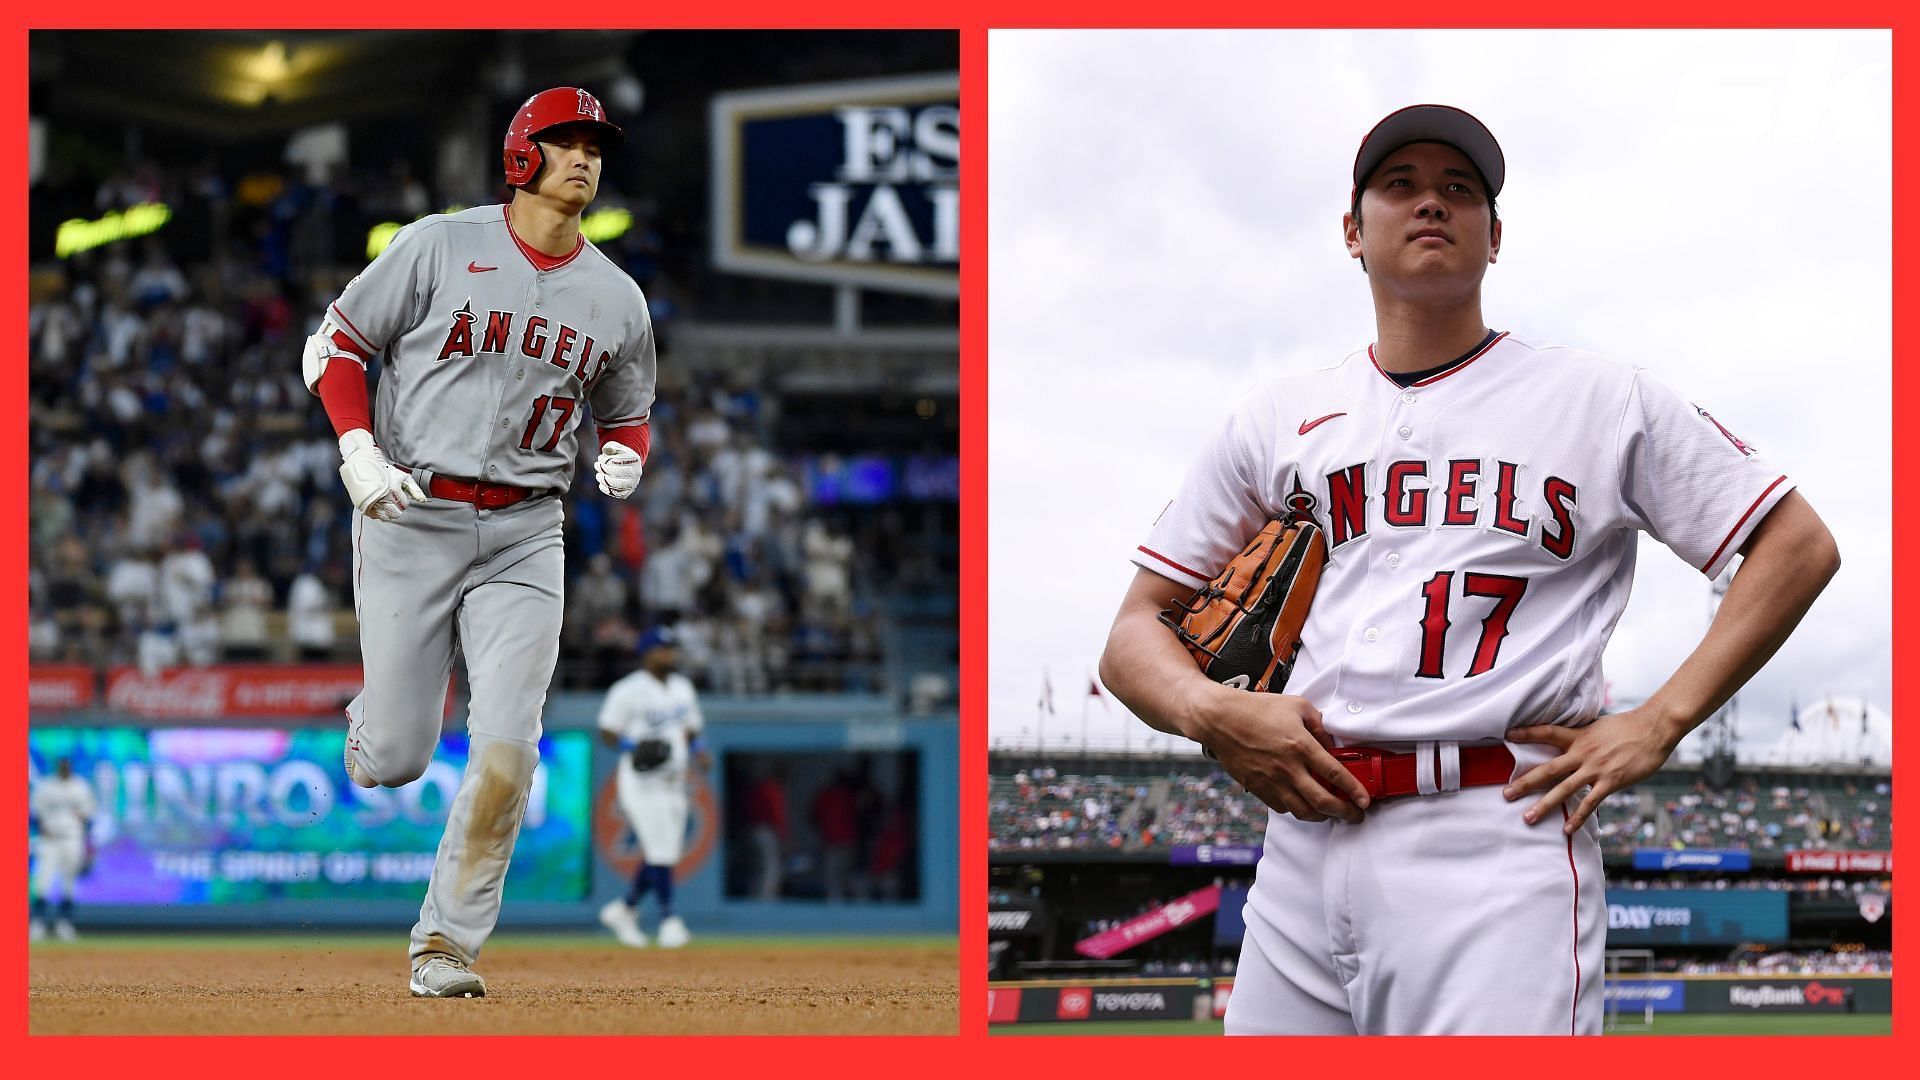 LA Angels All-Star Shohei Ohtani